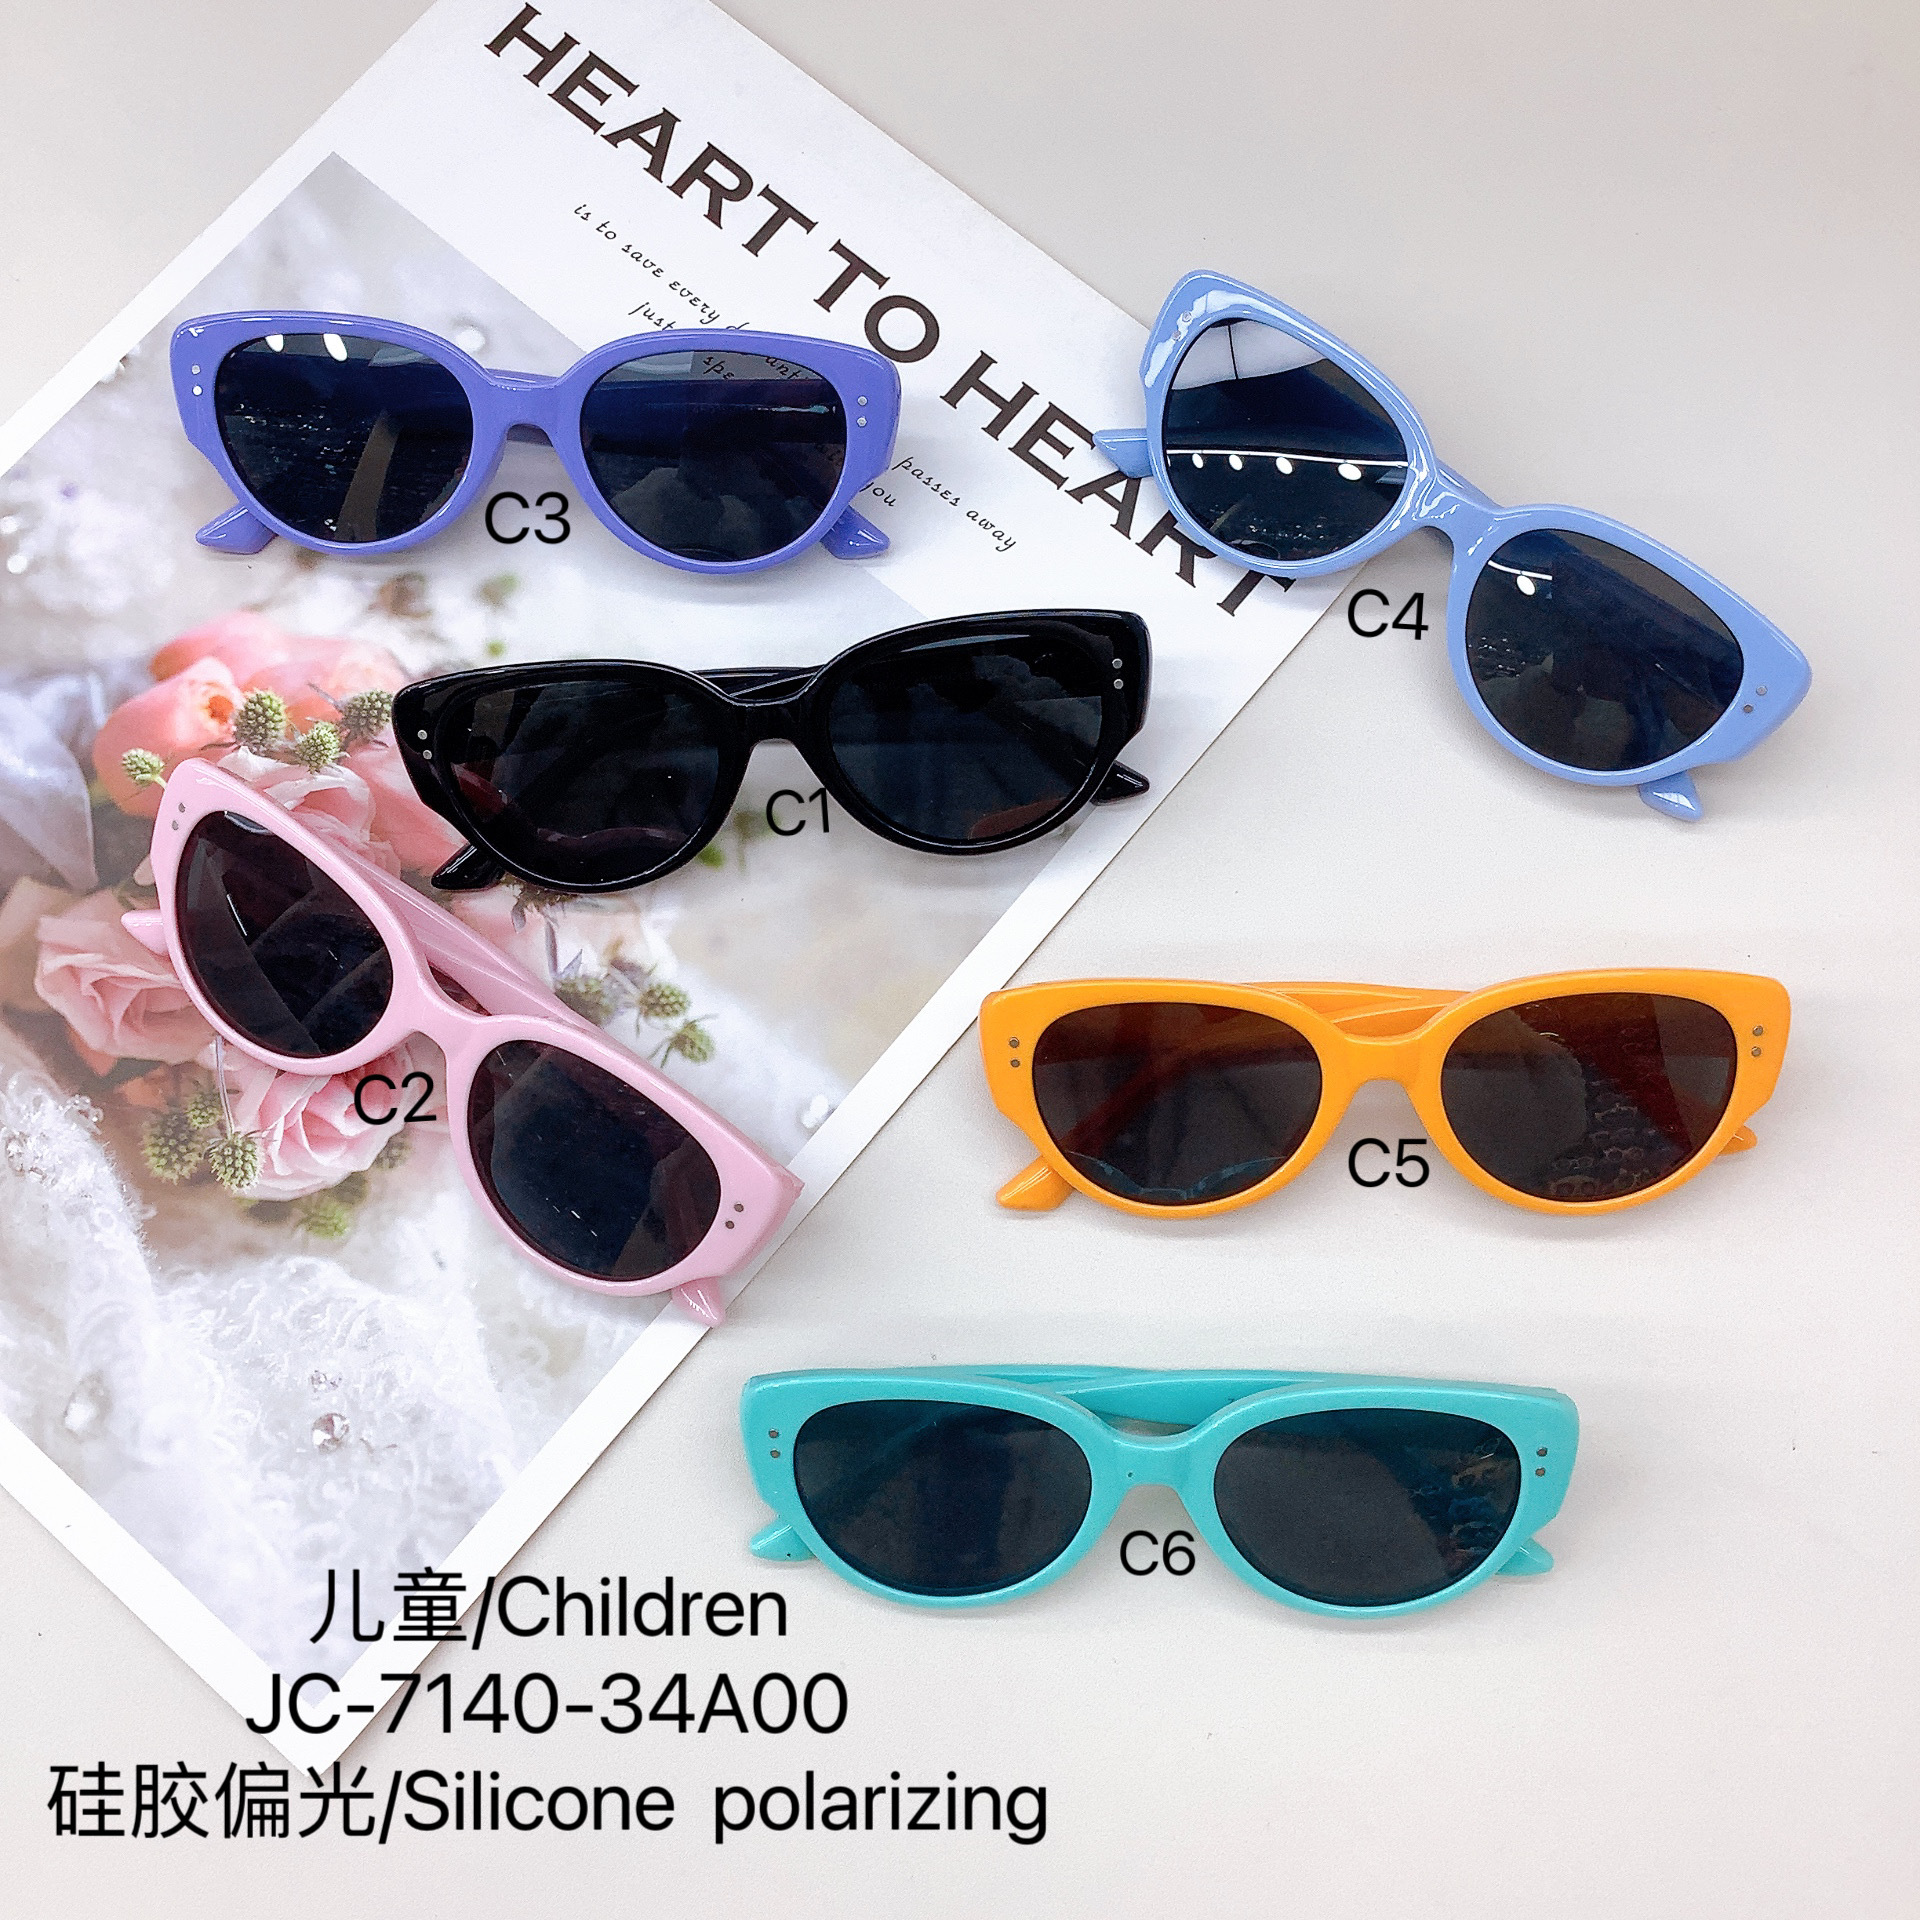 New Silicone Polarized Kids Sunglasses Travel Sun-Proof Girls Sunglasses Uv Protection Boys Glasses Tide